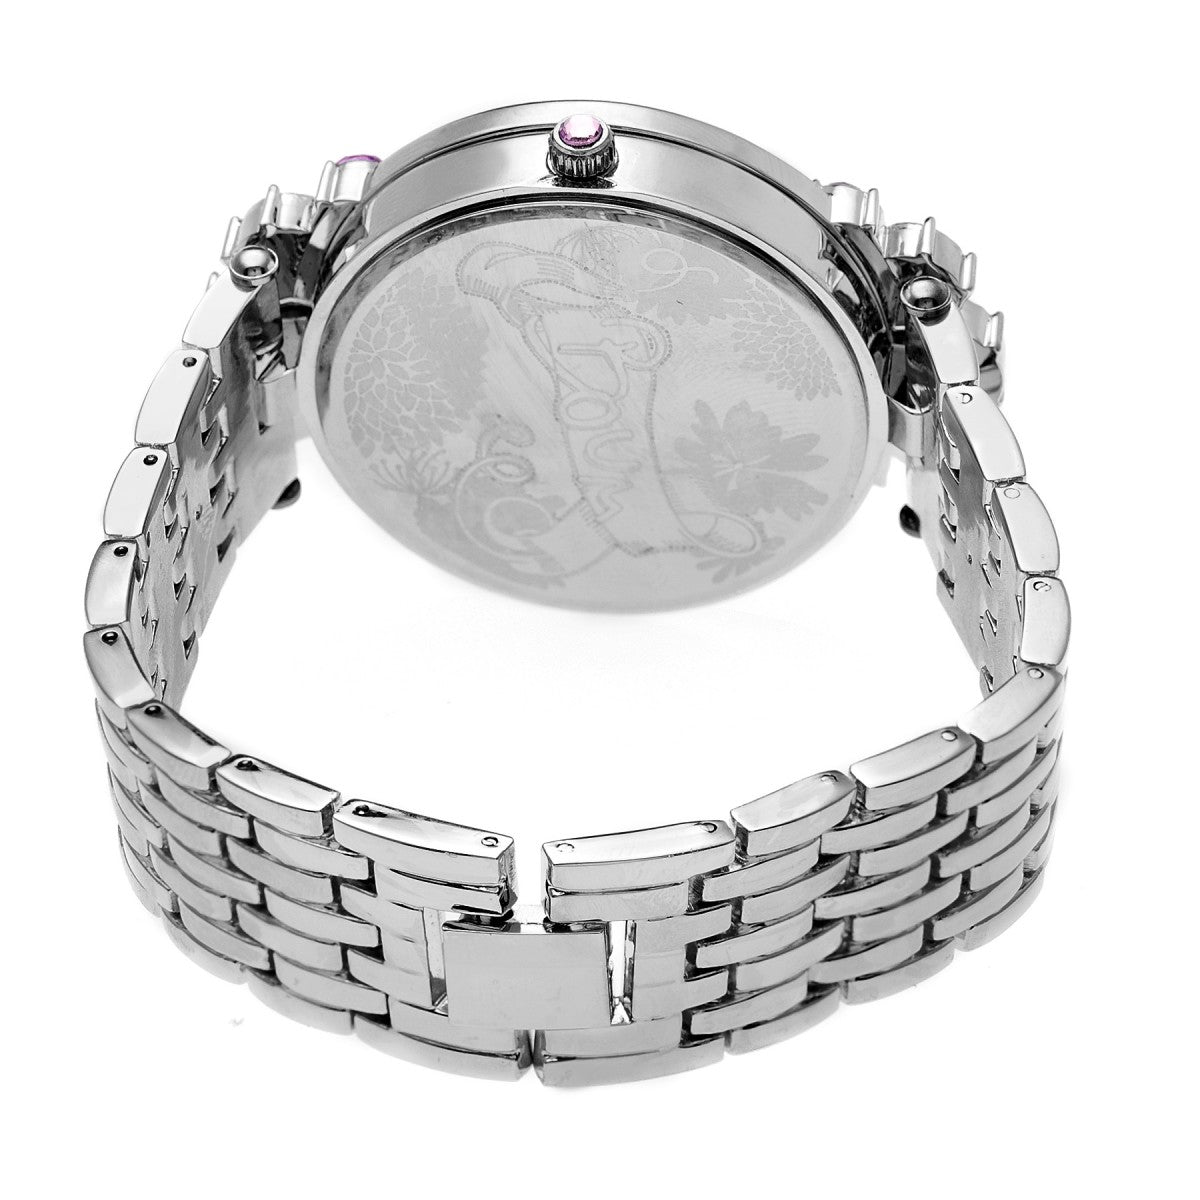 Boum Precieux Crystal-Surround Bezel Bracelet Watch - Silver - BOUBM4201